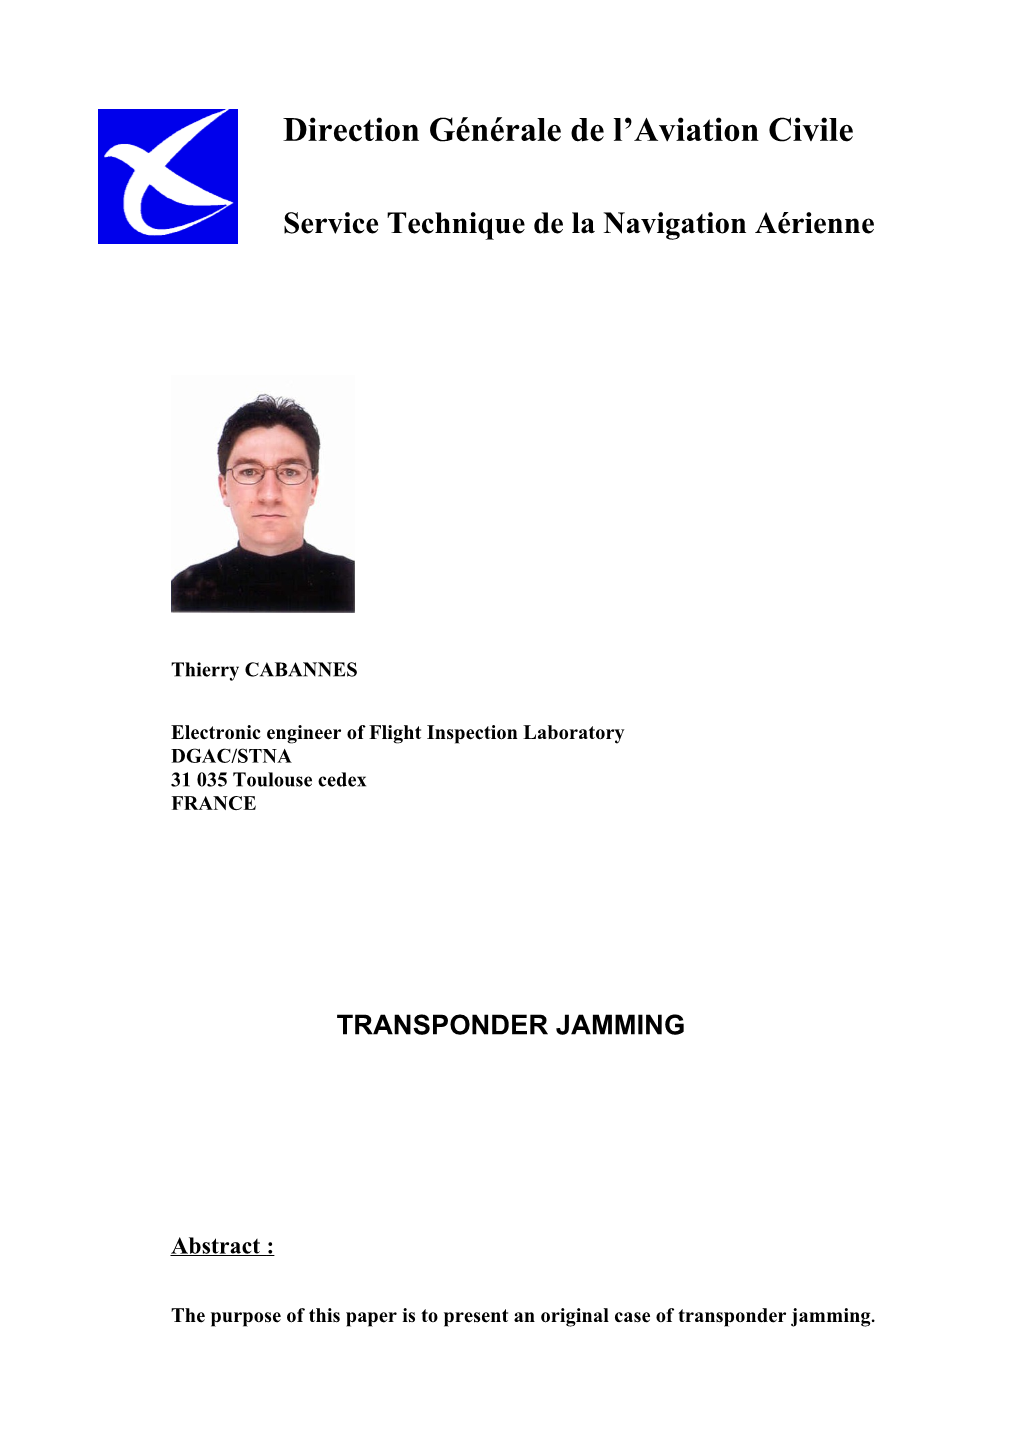 Electronic Engineer of Flight Inspection Laboratory